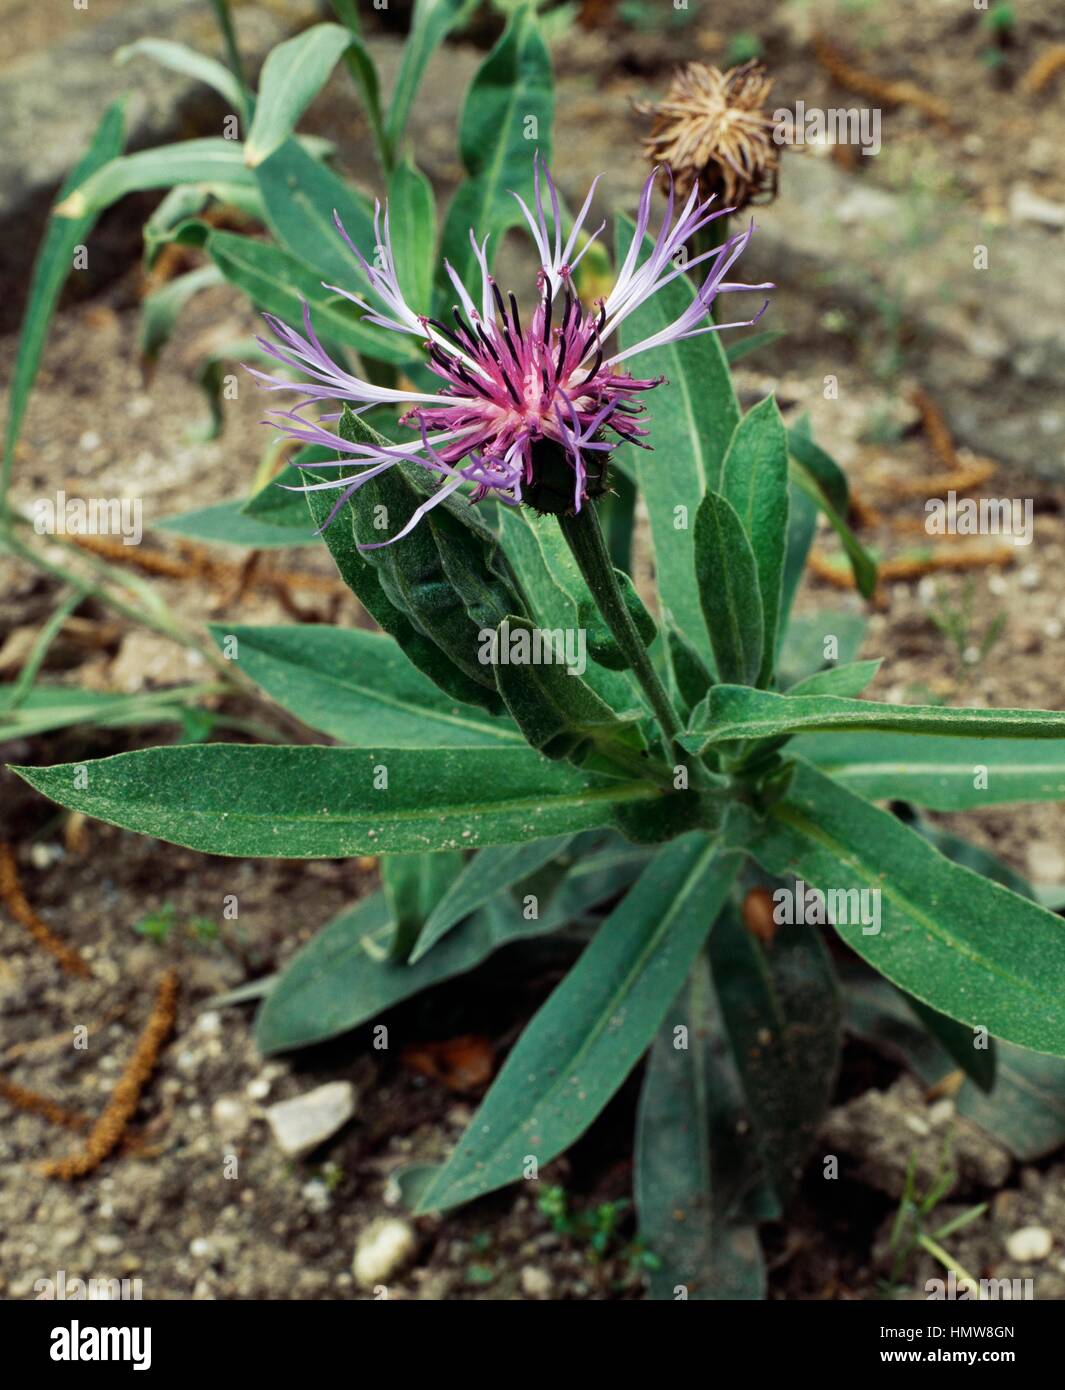 Perennial Cornflower (Cyanus montanus or Centaurea montana), Asteraceae. Stock Photo